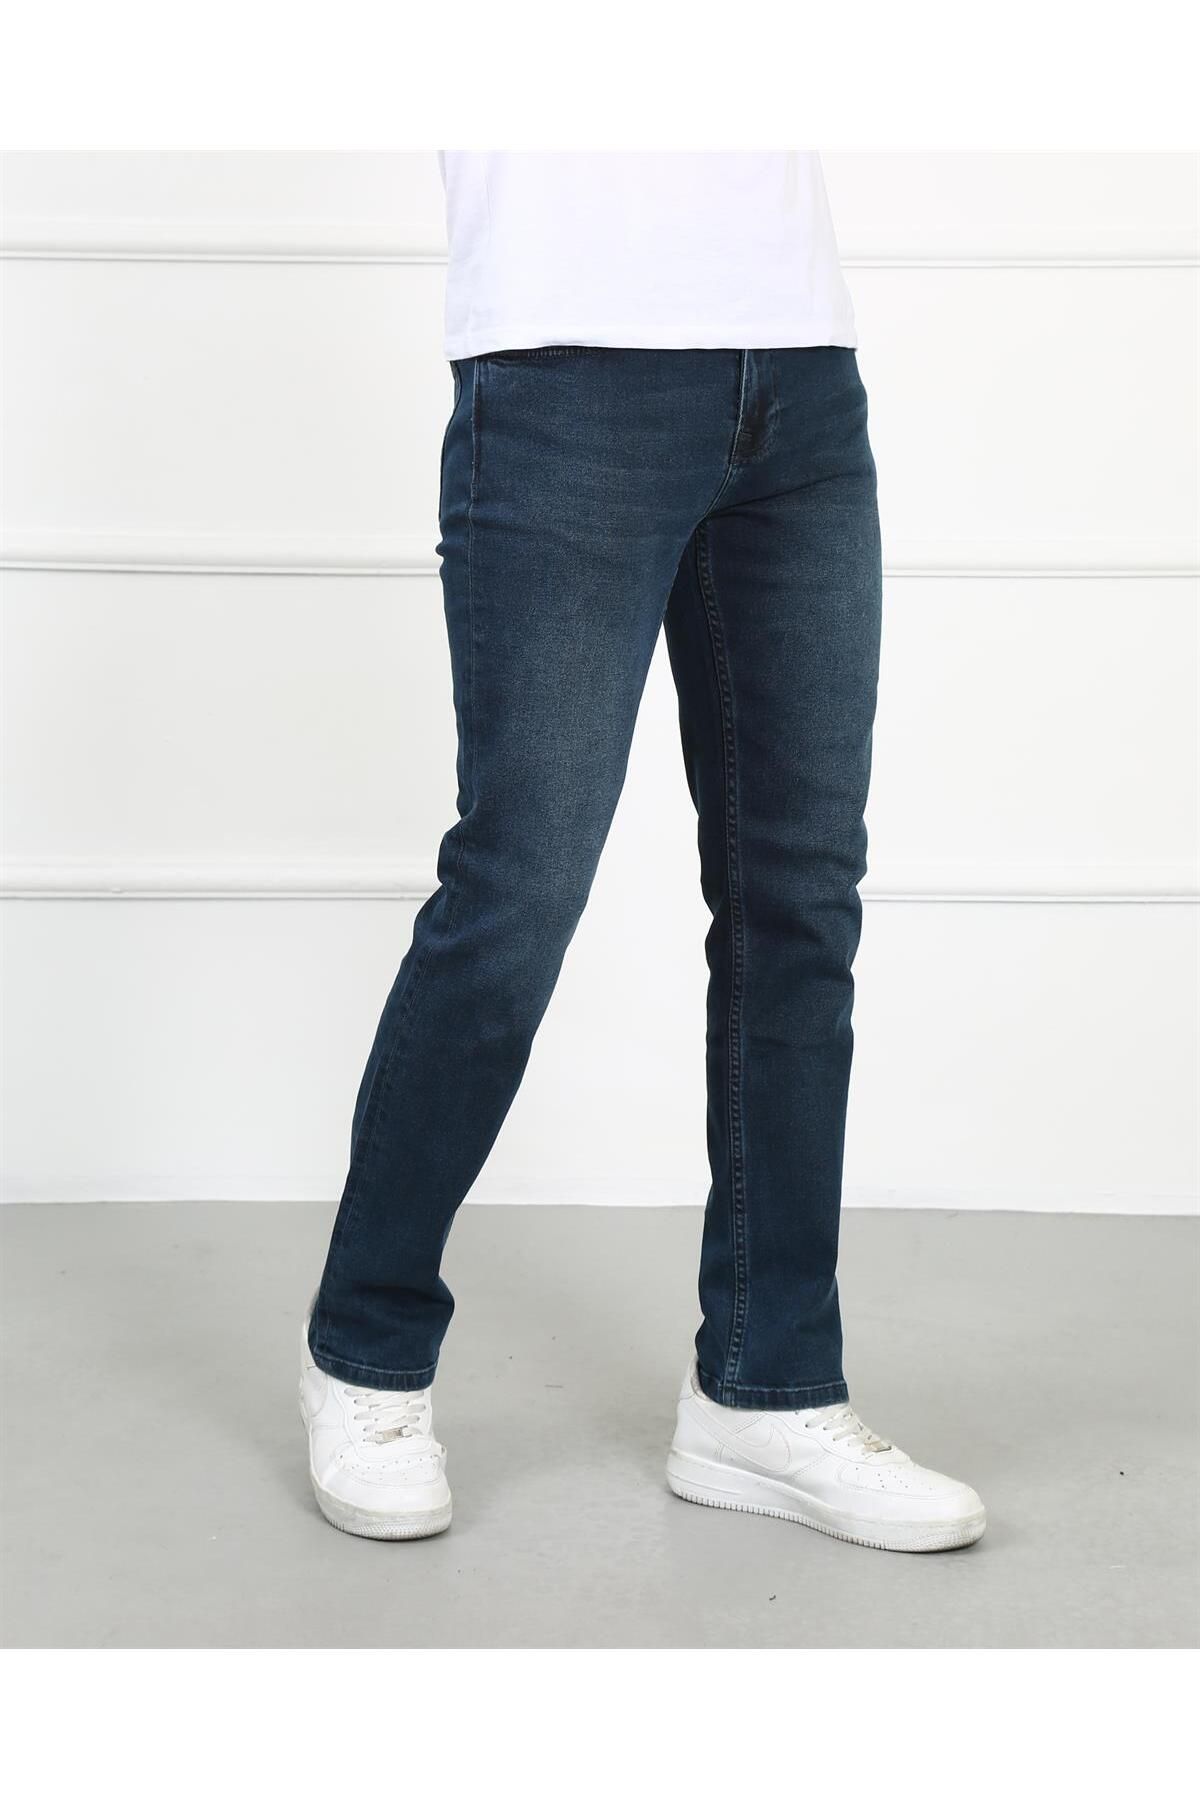 Twister Jeans Erkek Pantolon Gana 501-19 Blue